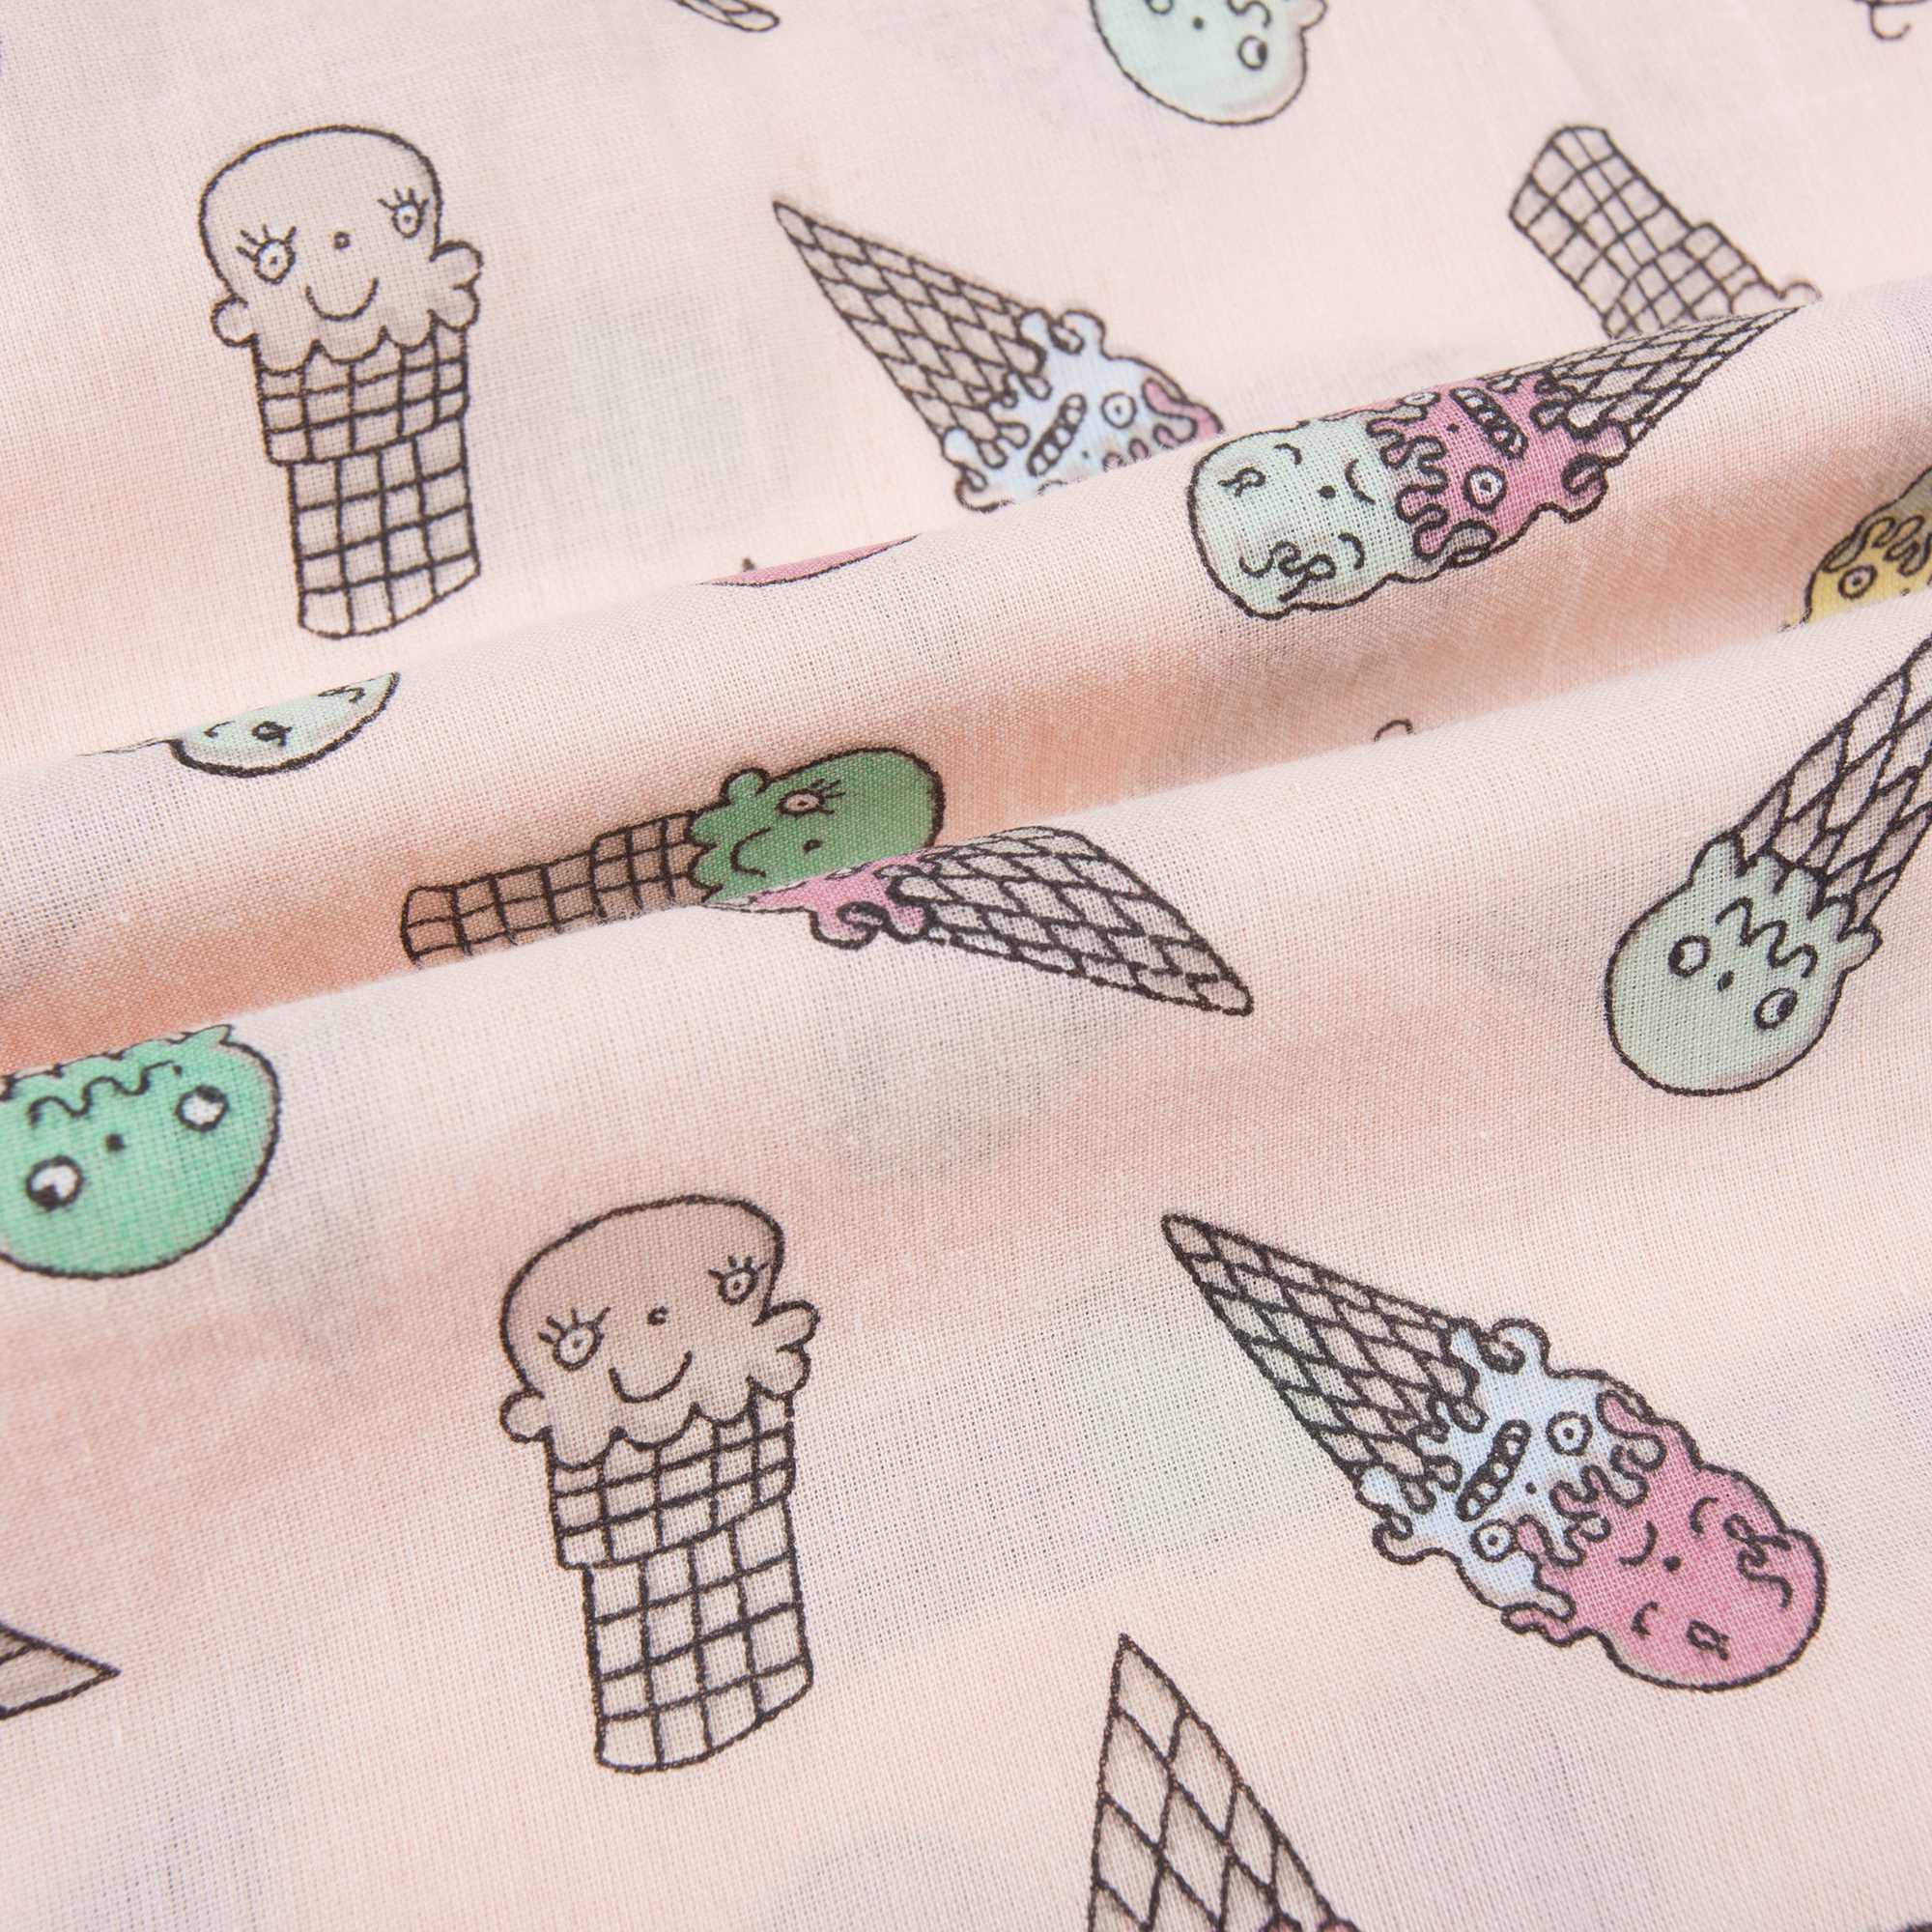 Baby Girls Pink Icecream Printed Dress